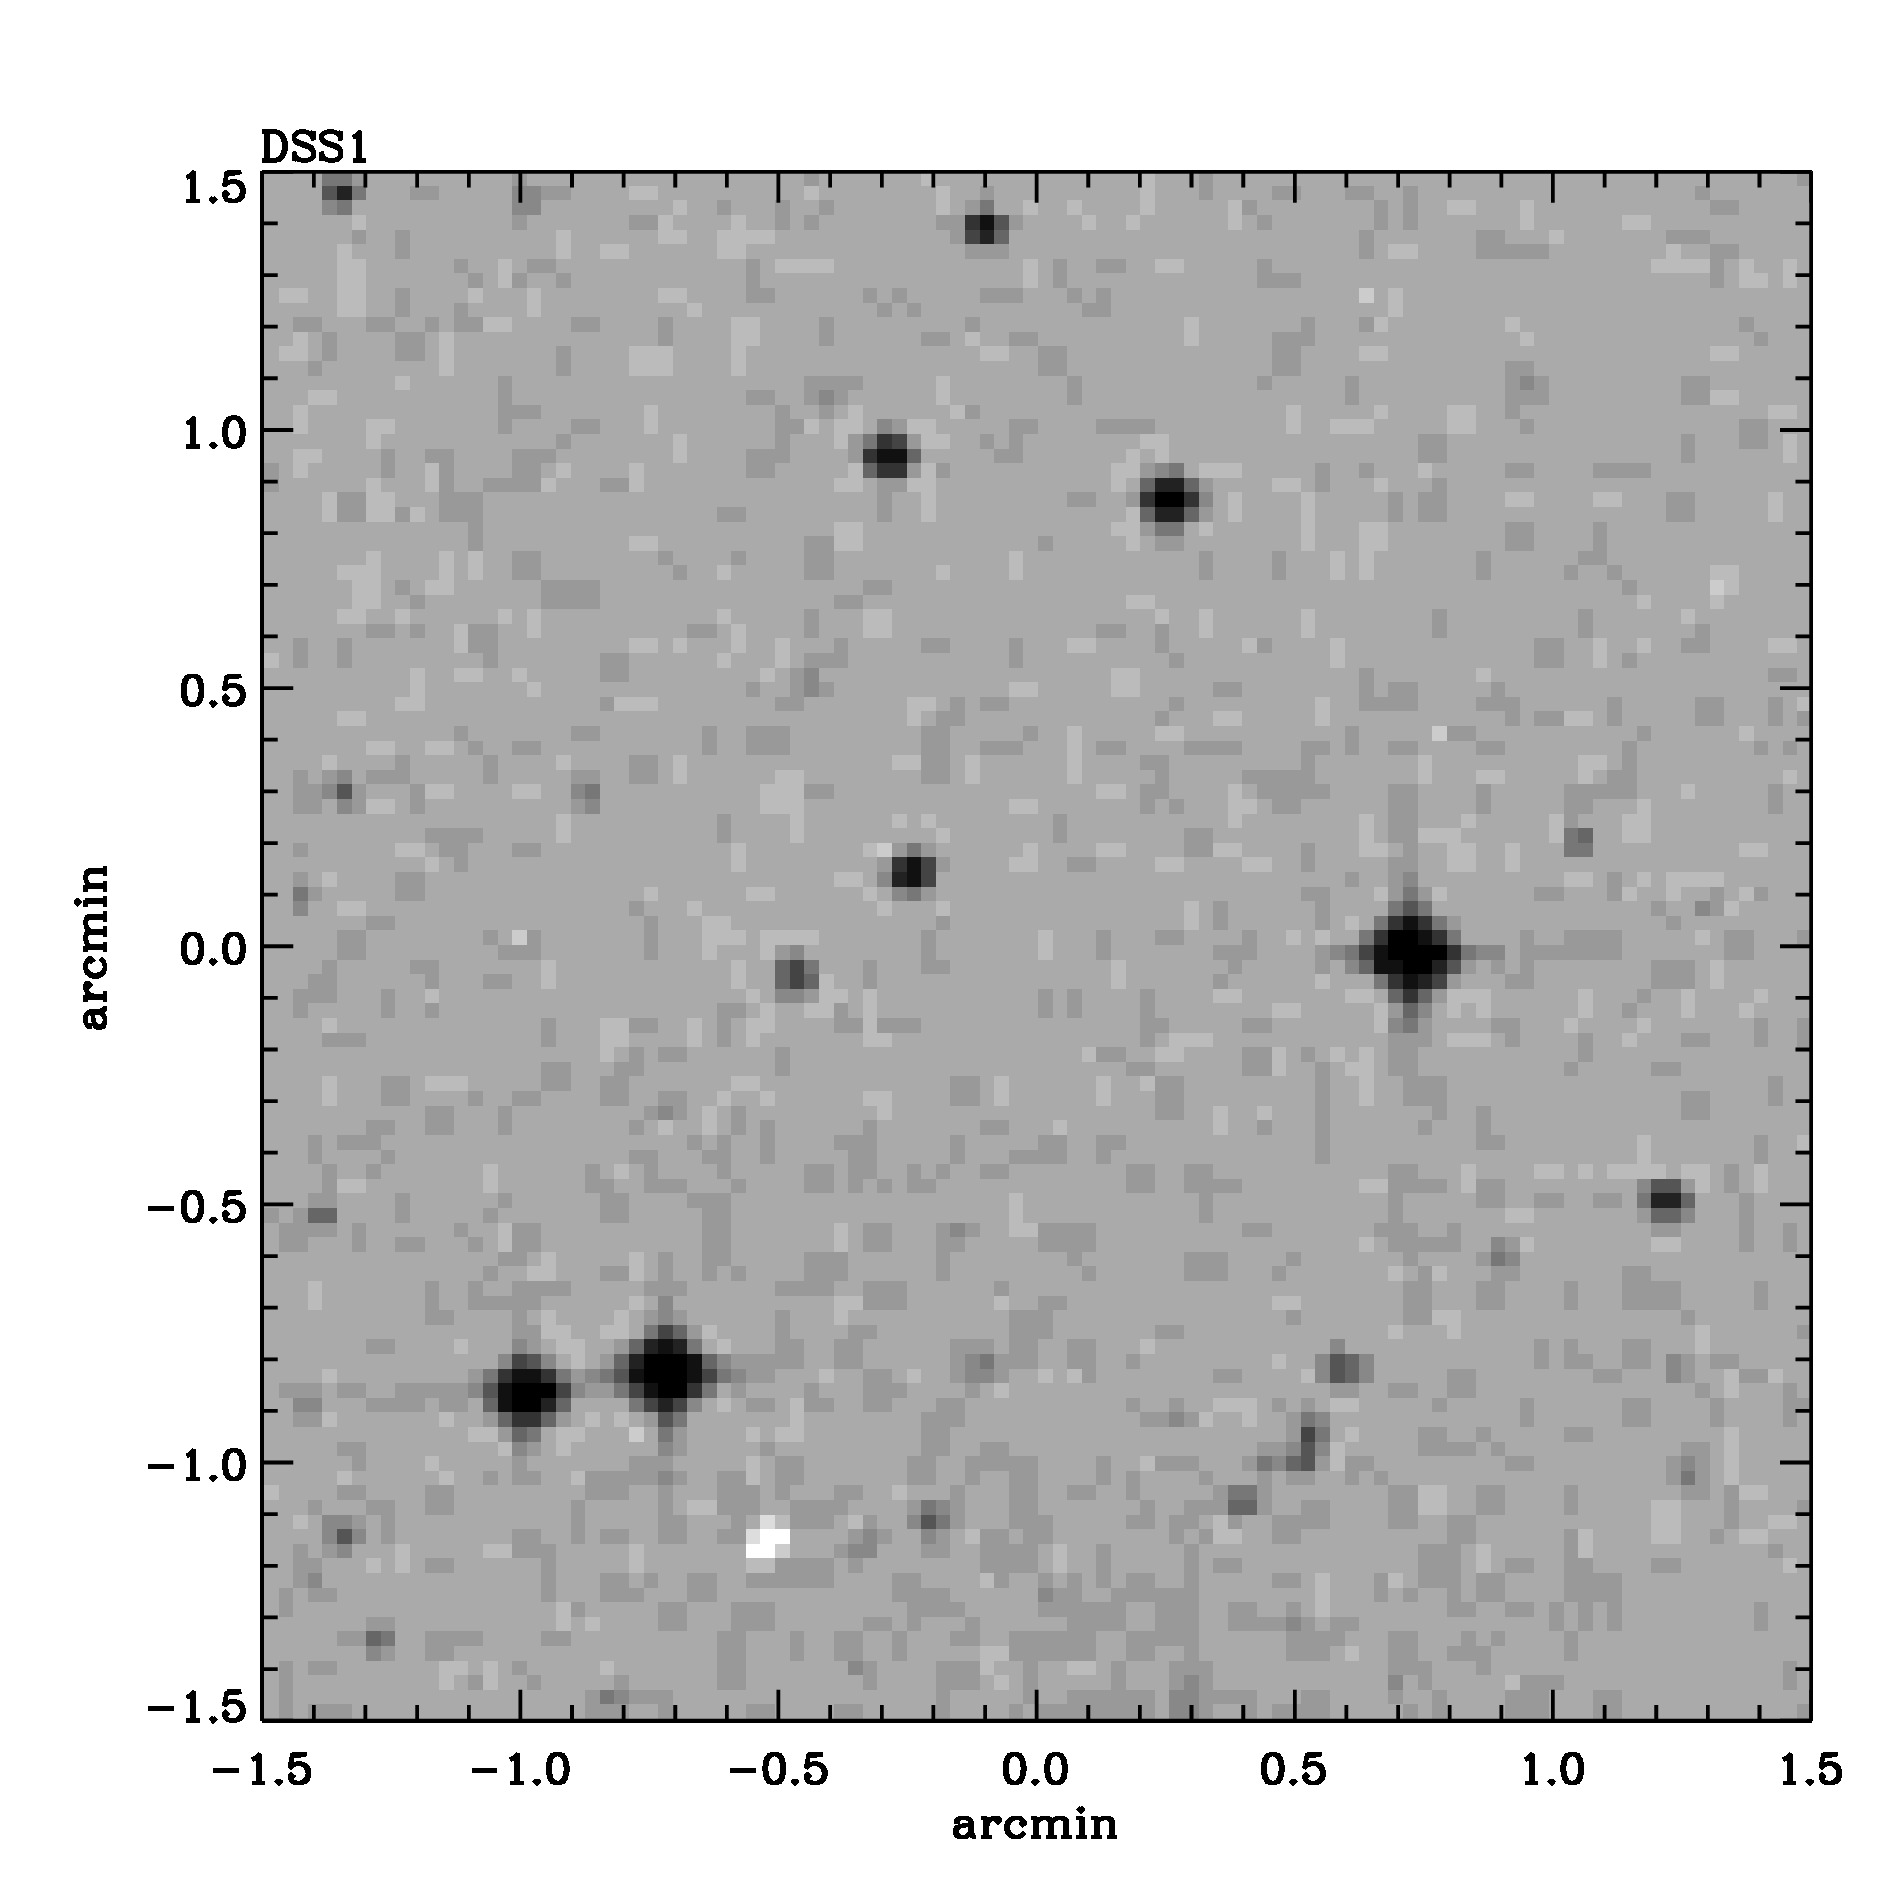 Optical image for SWIFT J1700.9-4610